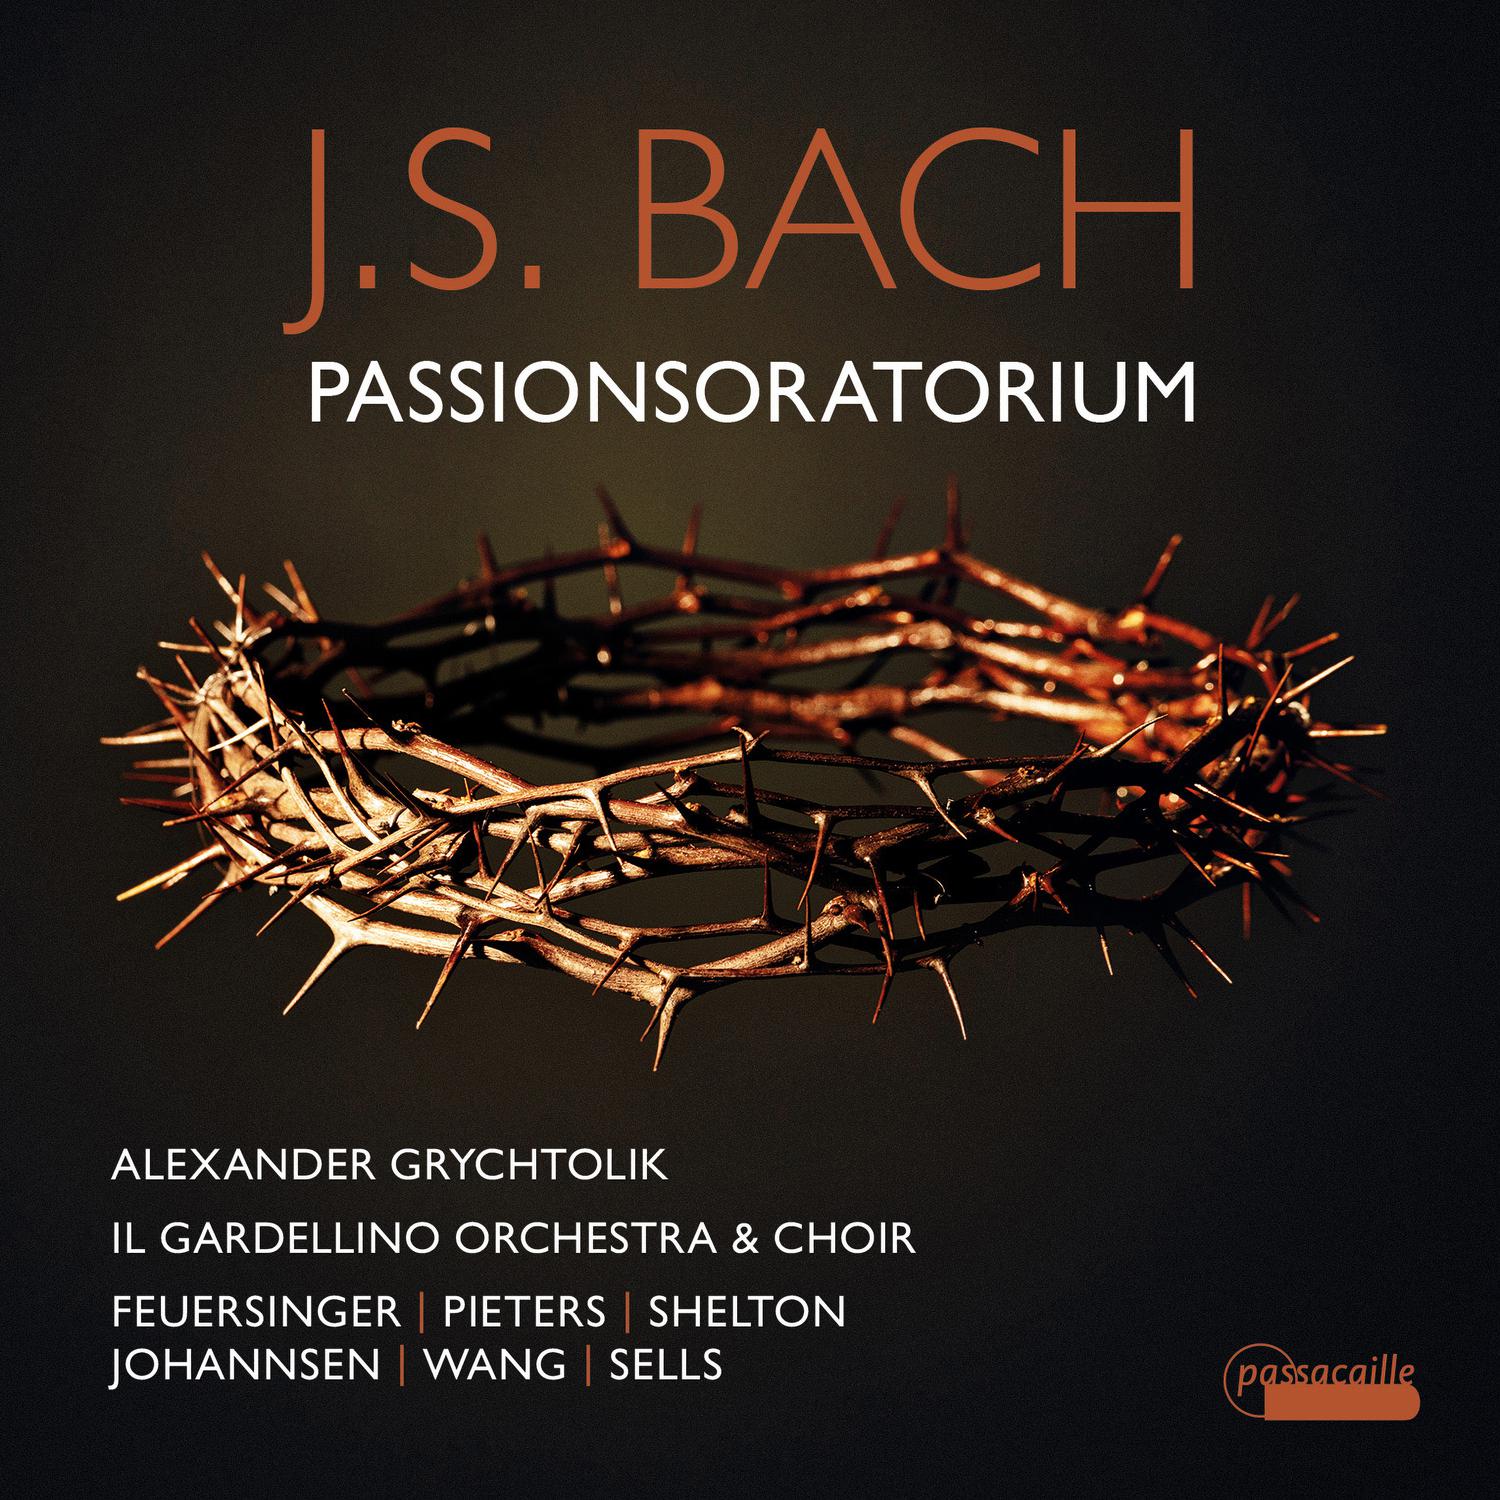 Il Gardellino - Passionsoratorium, BWV Anh. 169 (Reconstructed by Alexander Grychtolik), Pt. I: No. 2. Recitativ, 